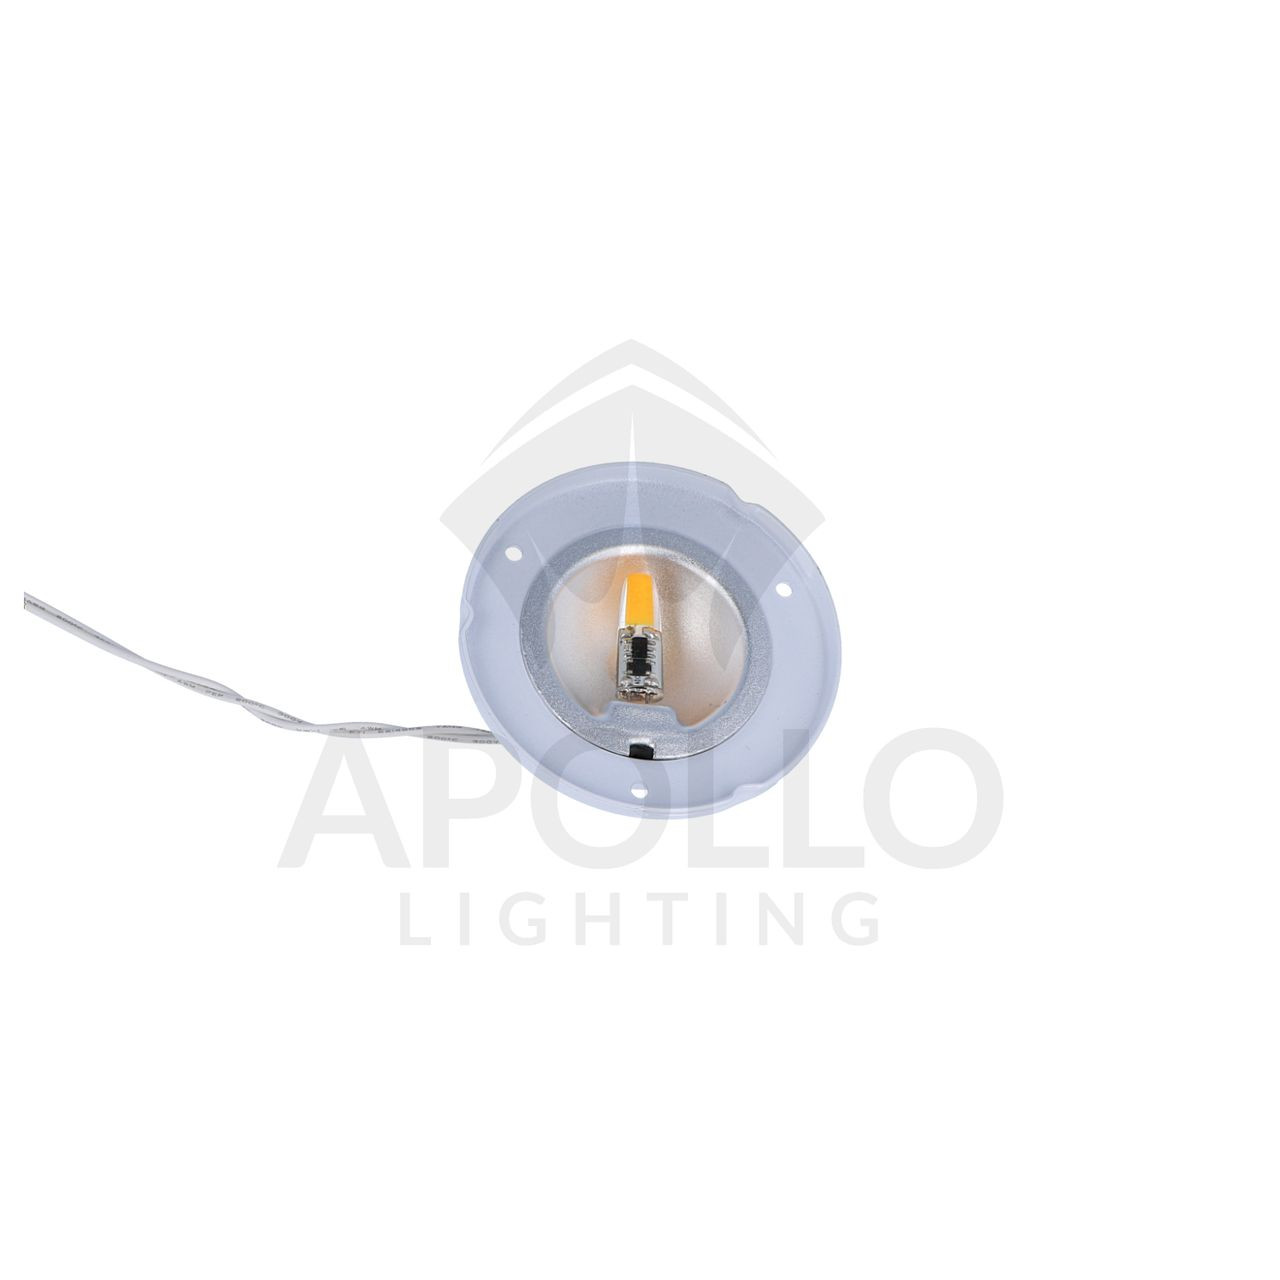 Mast - Venice Downlight - G4 Socket, Halogen, 20W - Apollo Lighting